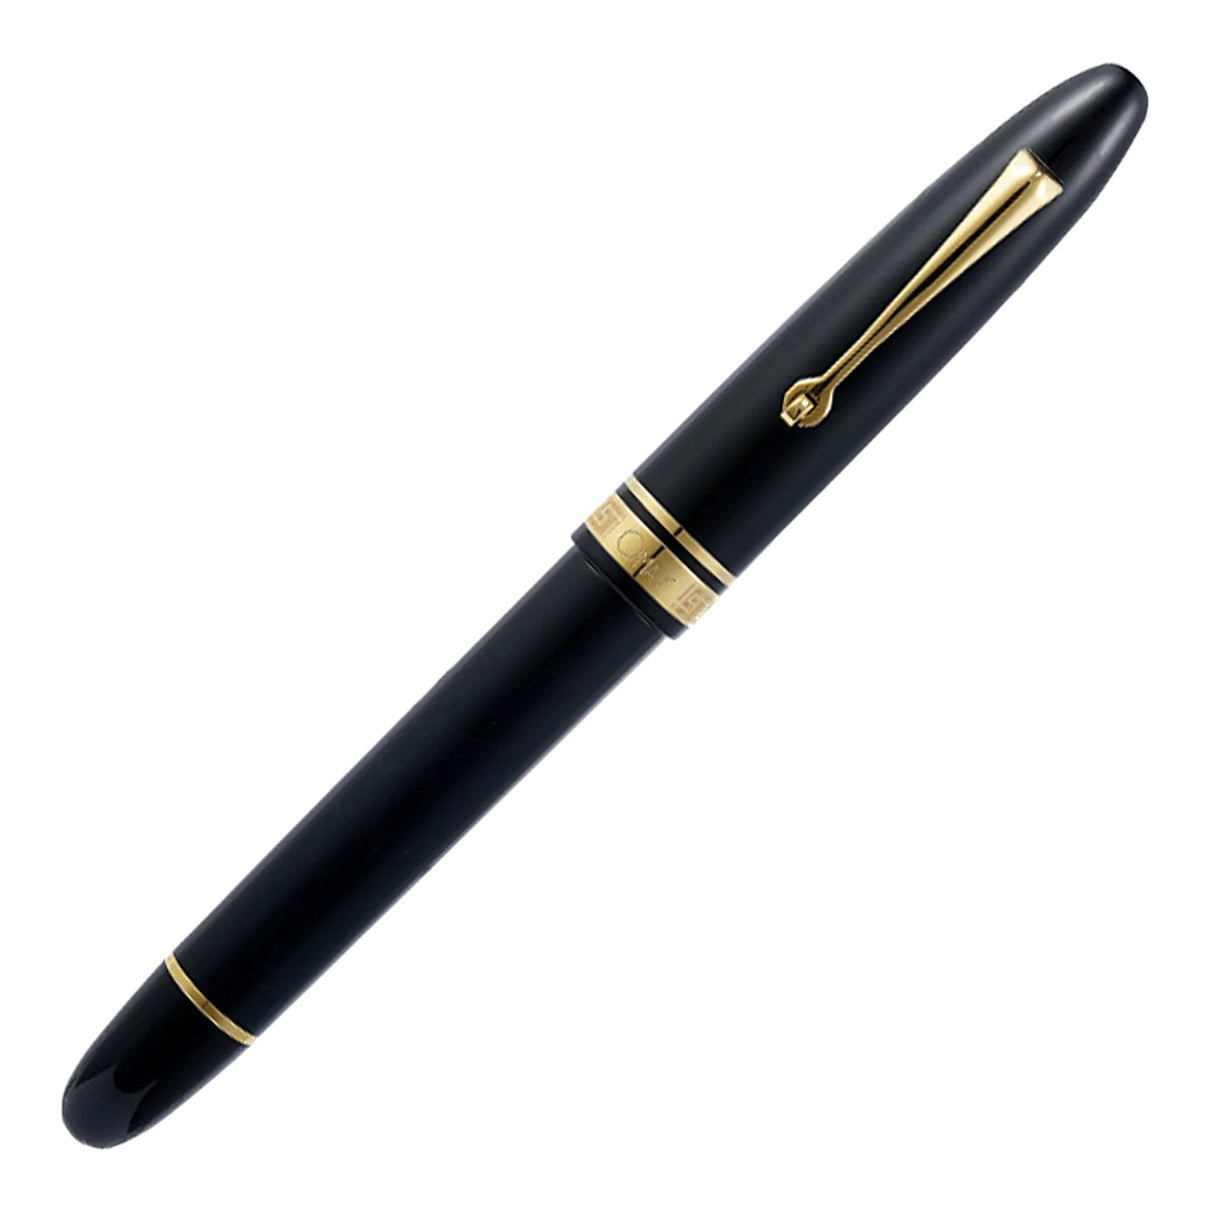 Omas Ogiva Nera Gold - Fountain Pen